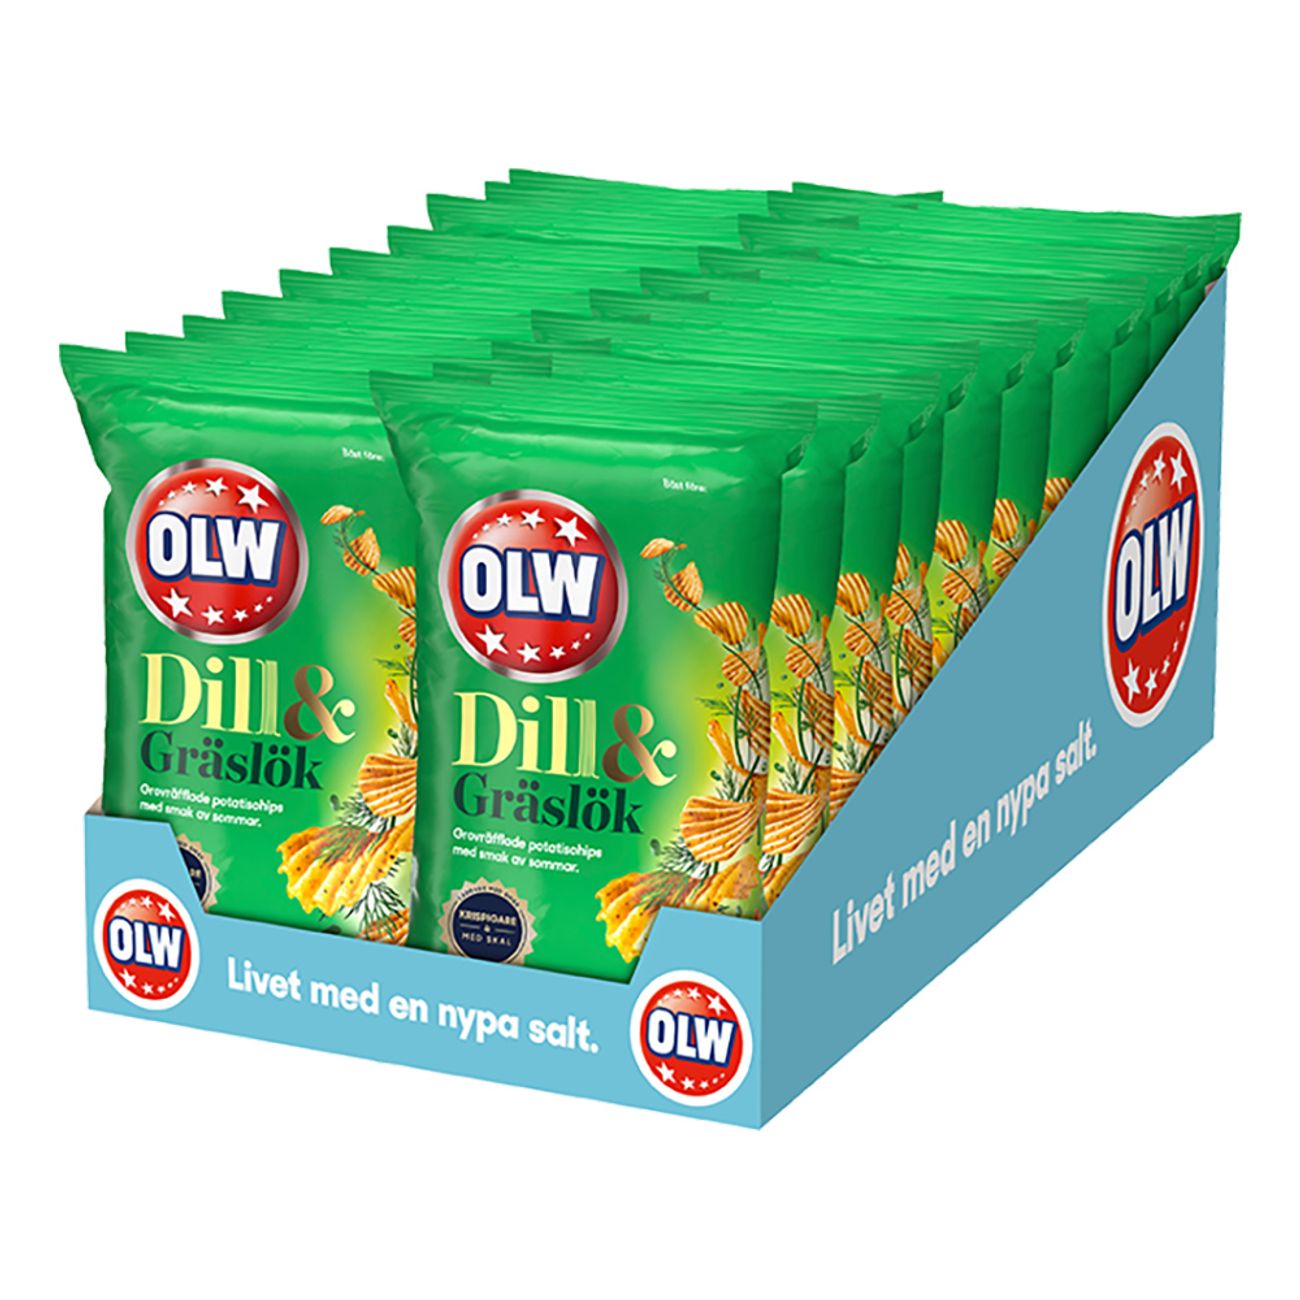 olw-dill-graslok-mini-23094-3